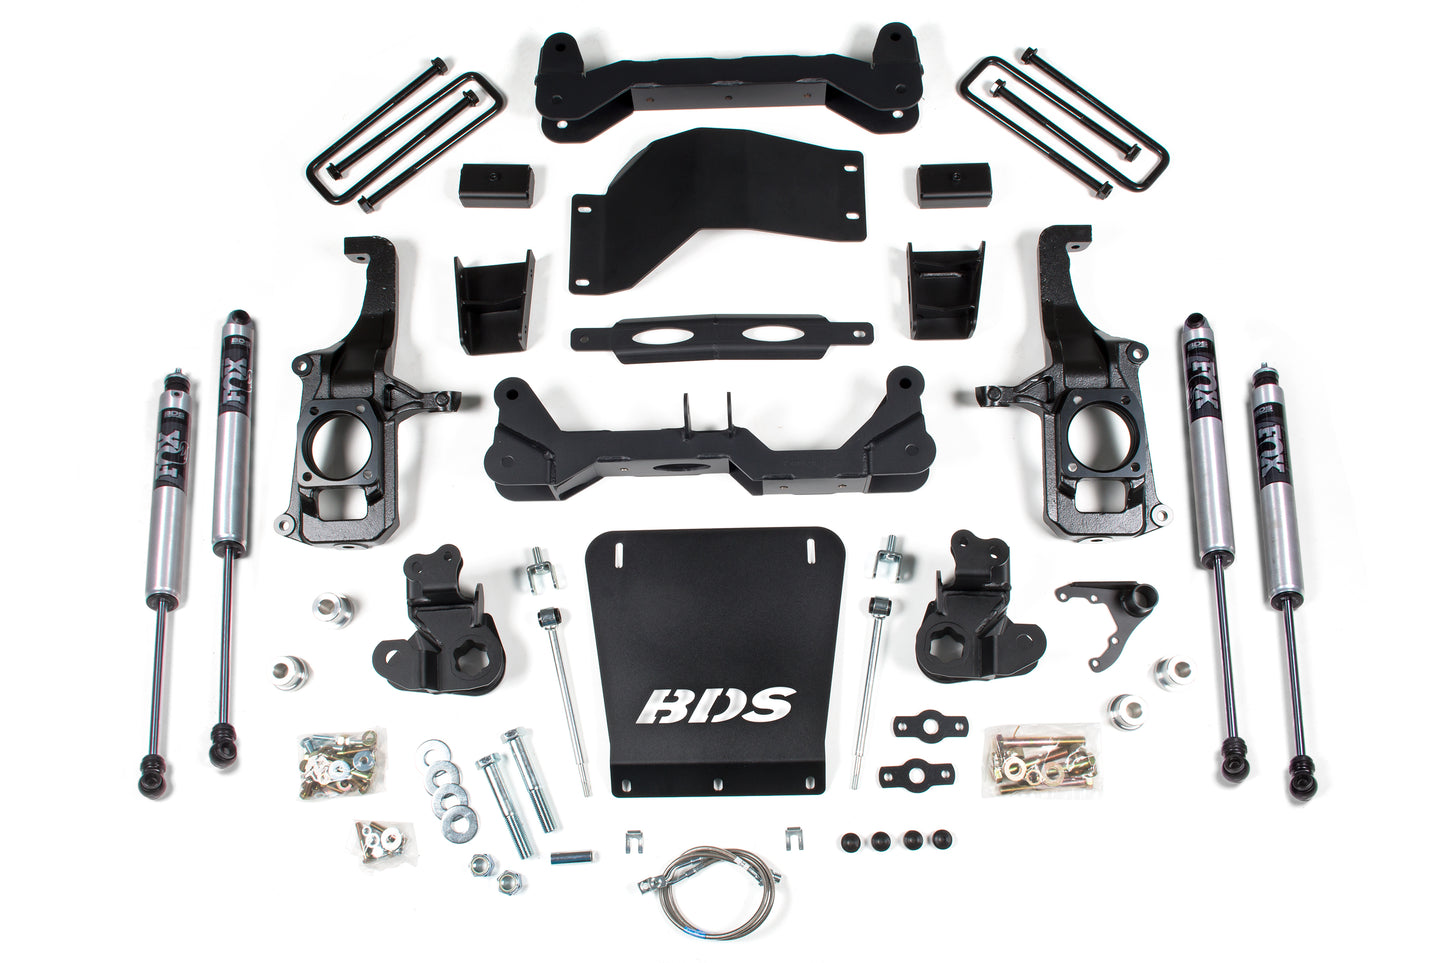 BDS Suspension 4.5 Inch Lift Kit | Chevy Silverado or GMC Sierra 2500HD/3500HD (11-19)